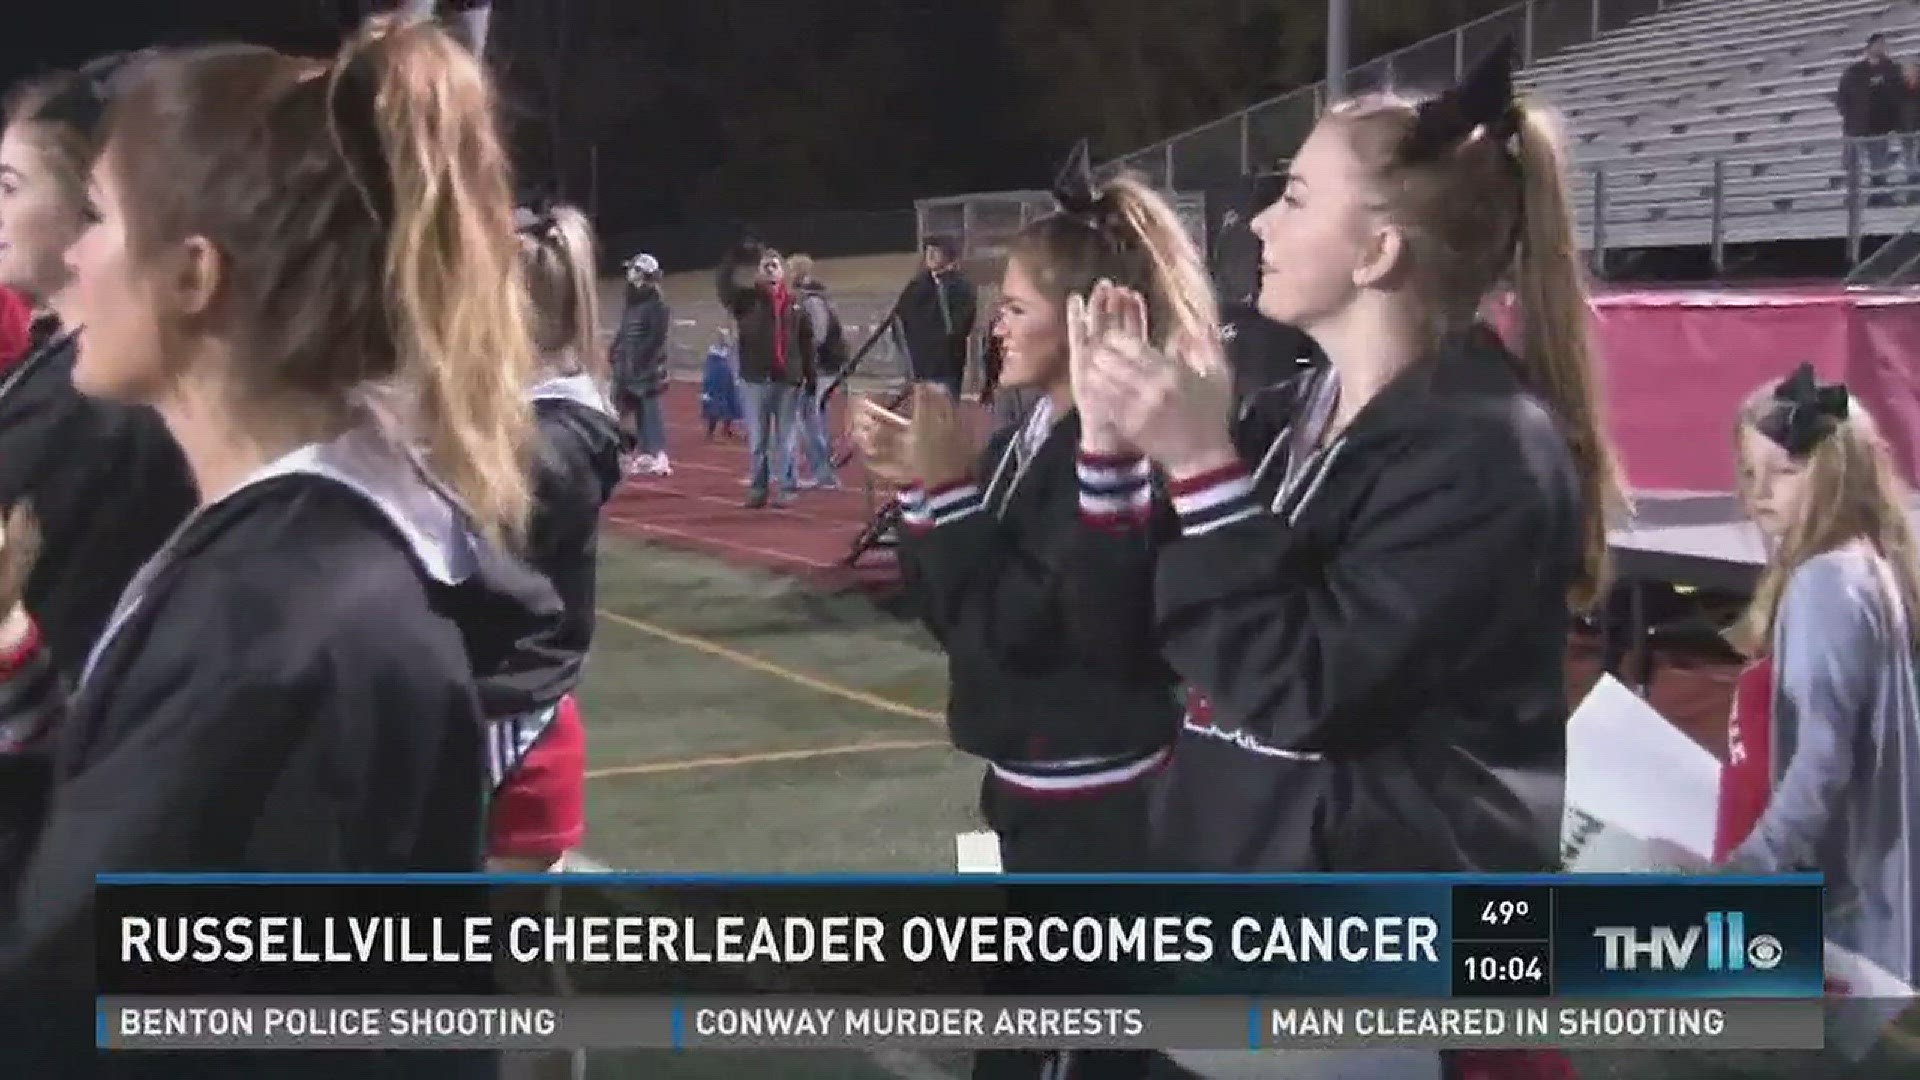 Russellville cheerleader overcomes cancer